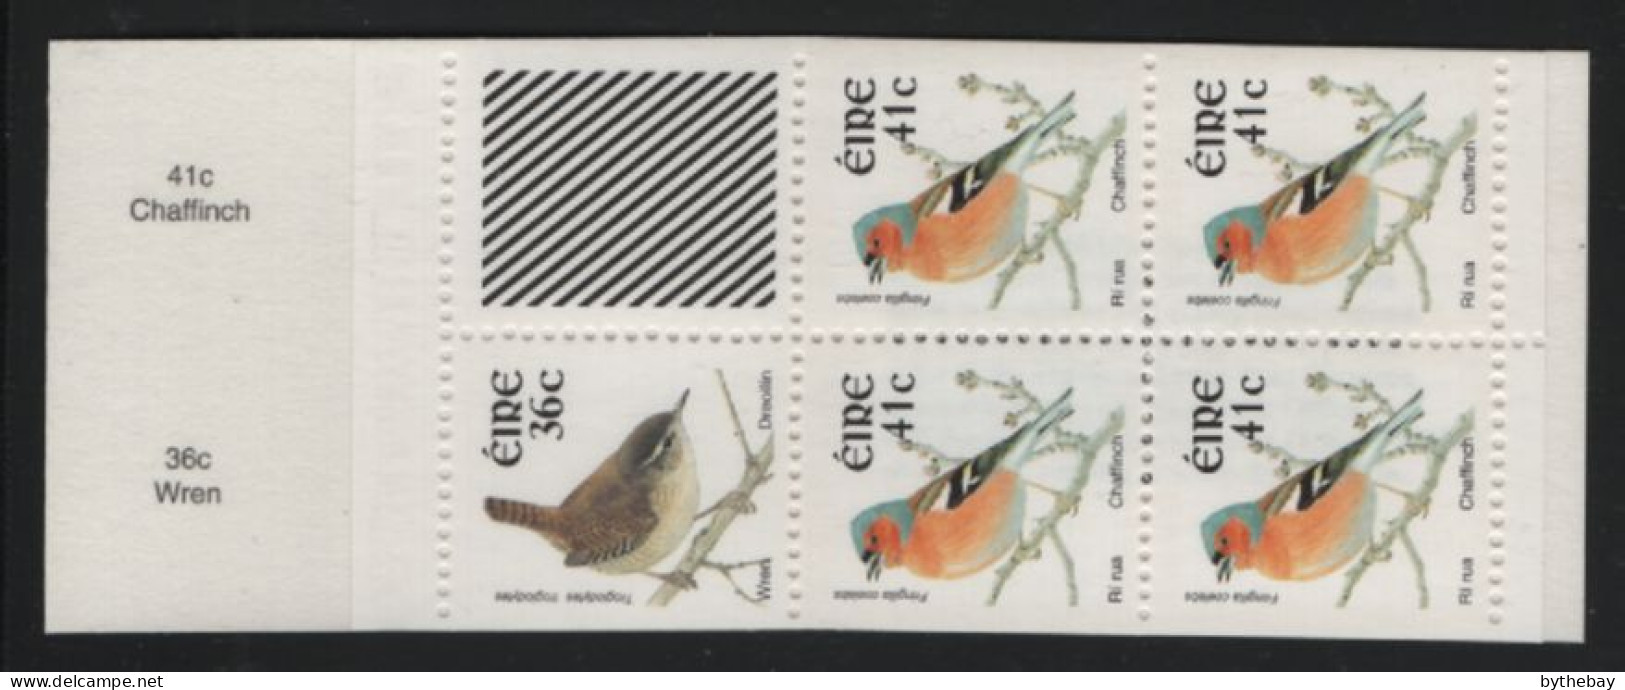 Ireland 2002 MNH Sc 1423a 41c Chatfinch, 36c Wren Booklet - Unused Stamps